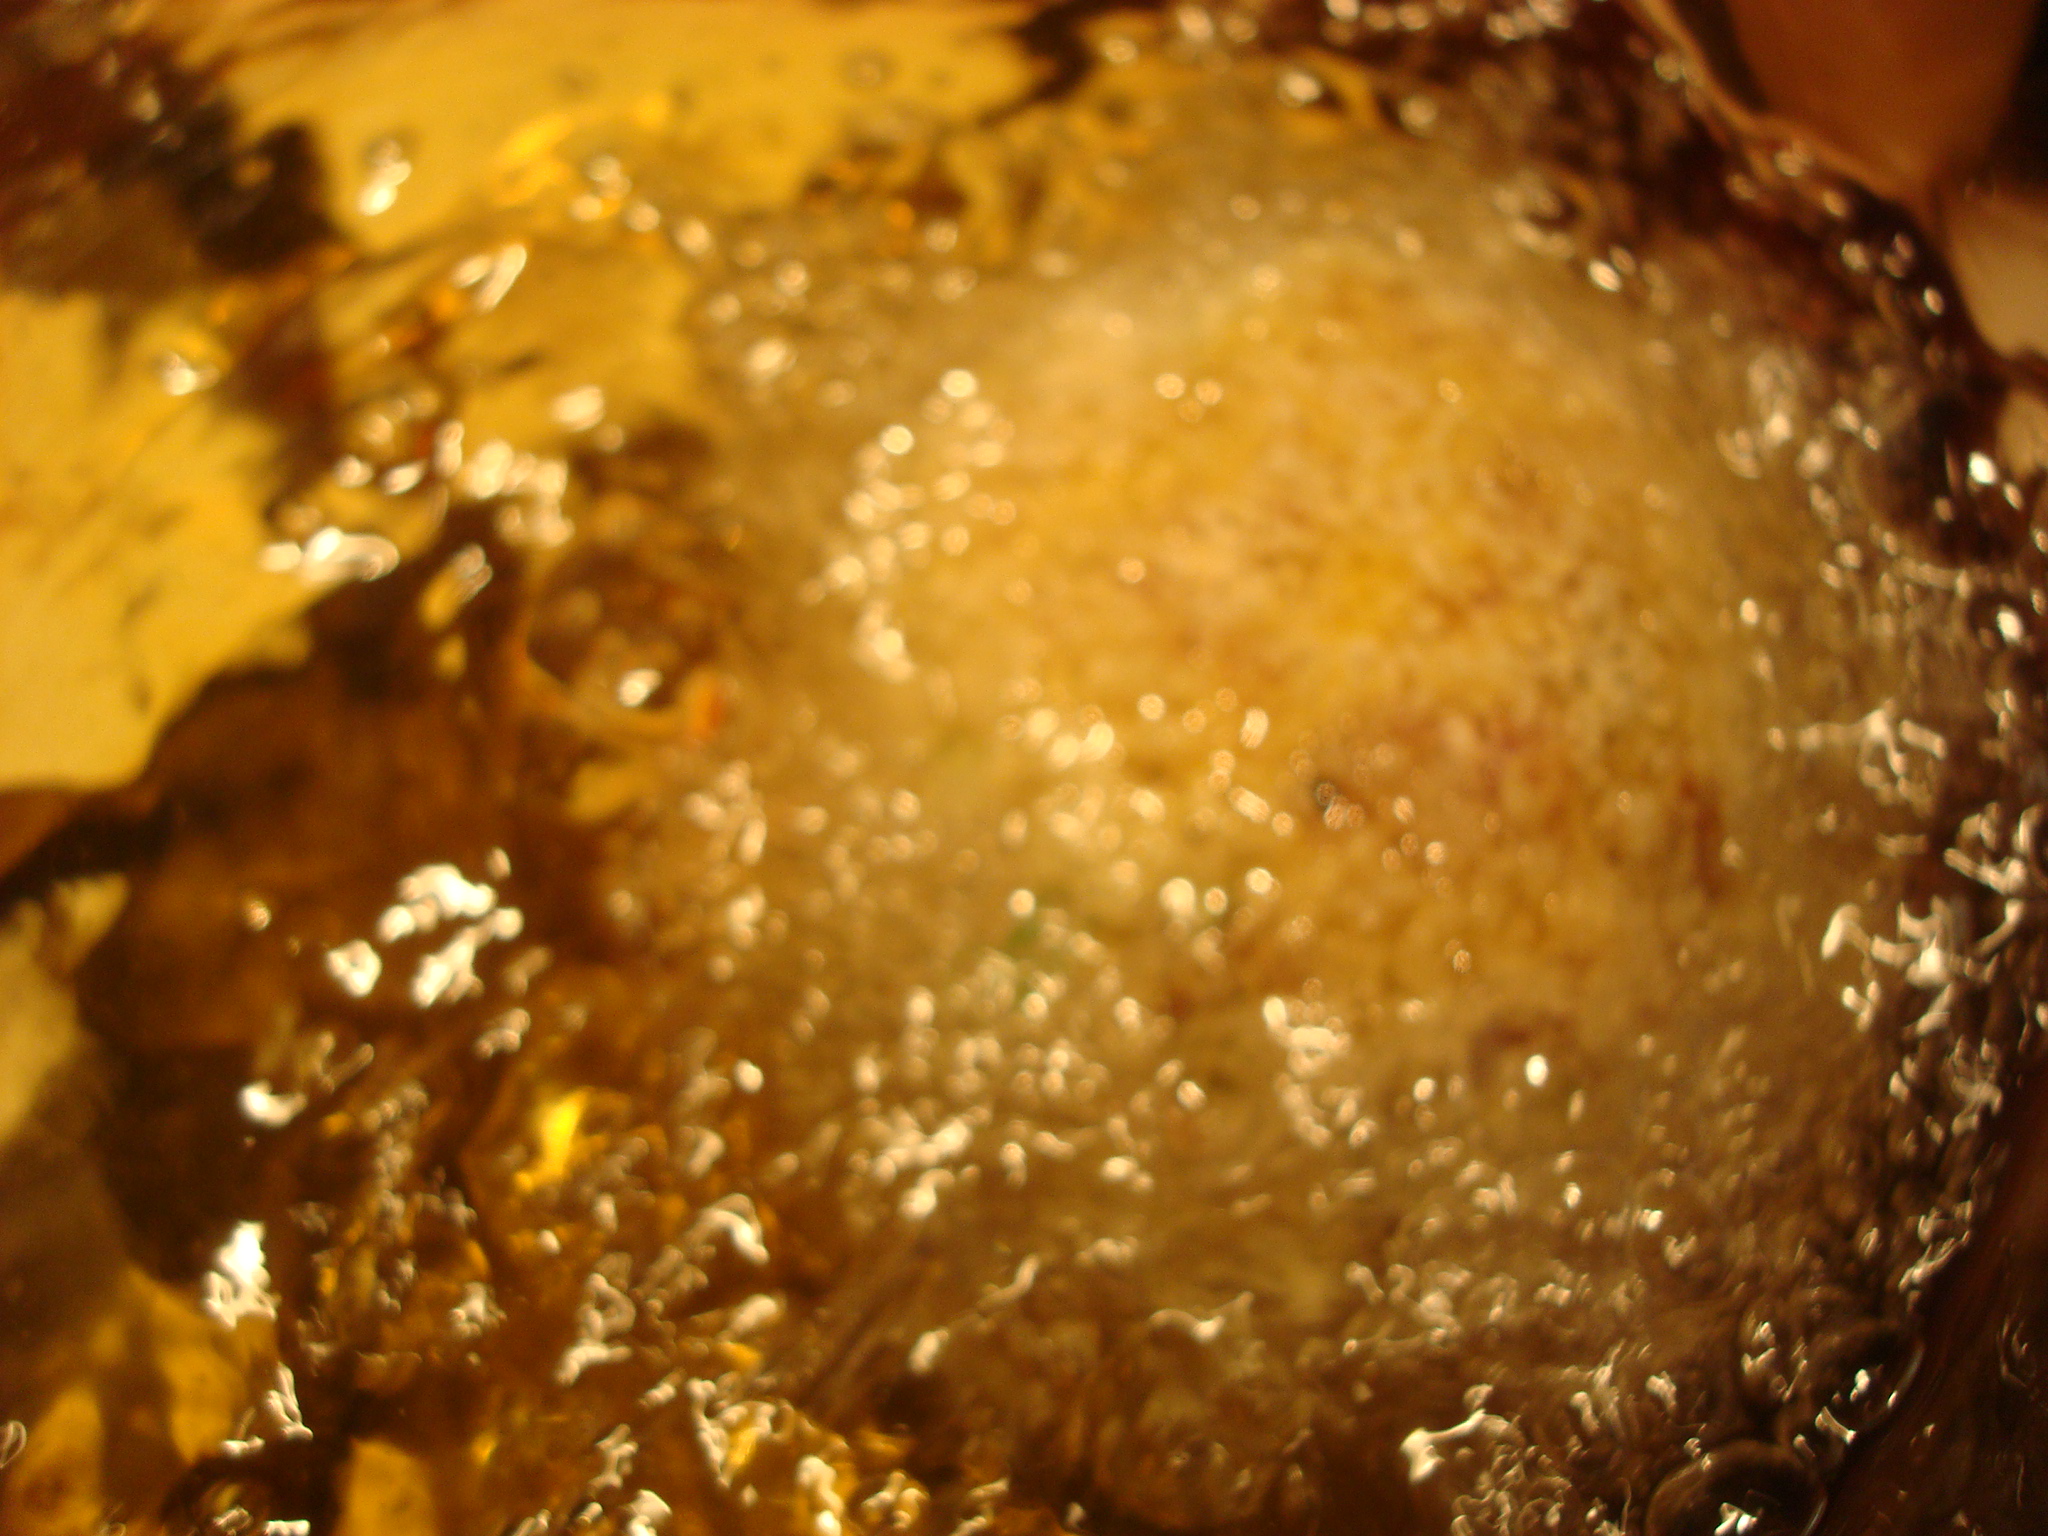 Frying Process for Homemade Scotch Eggs